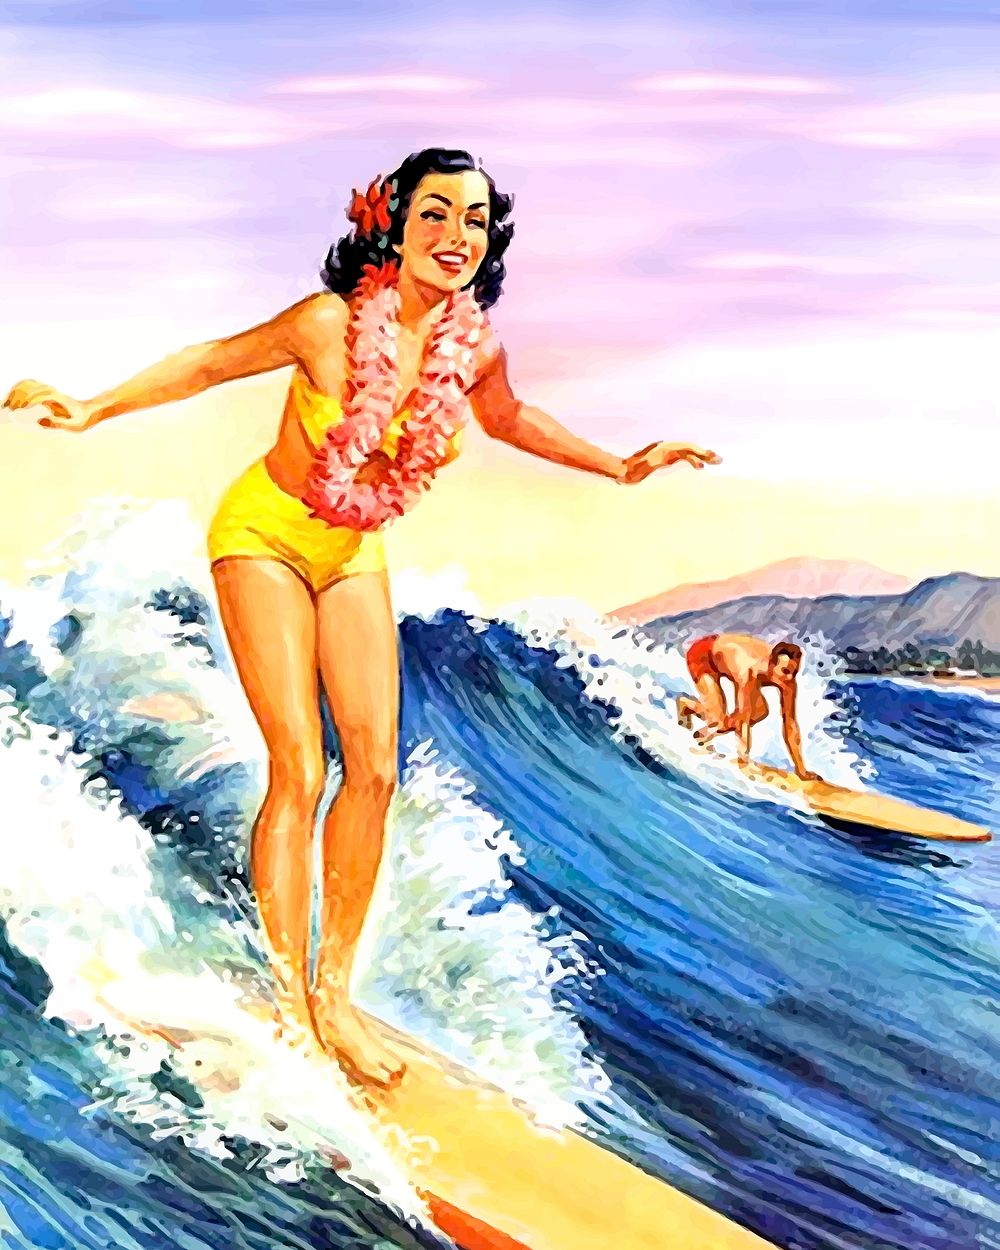 Woman surfing clipart illustration psd. Free public domain CC0 image.